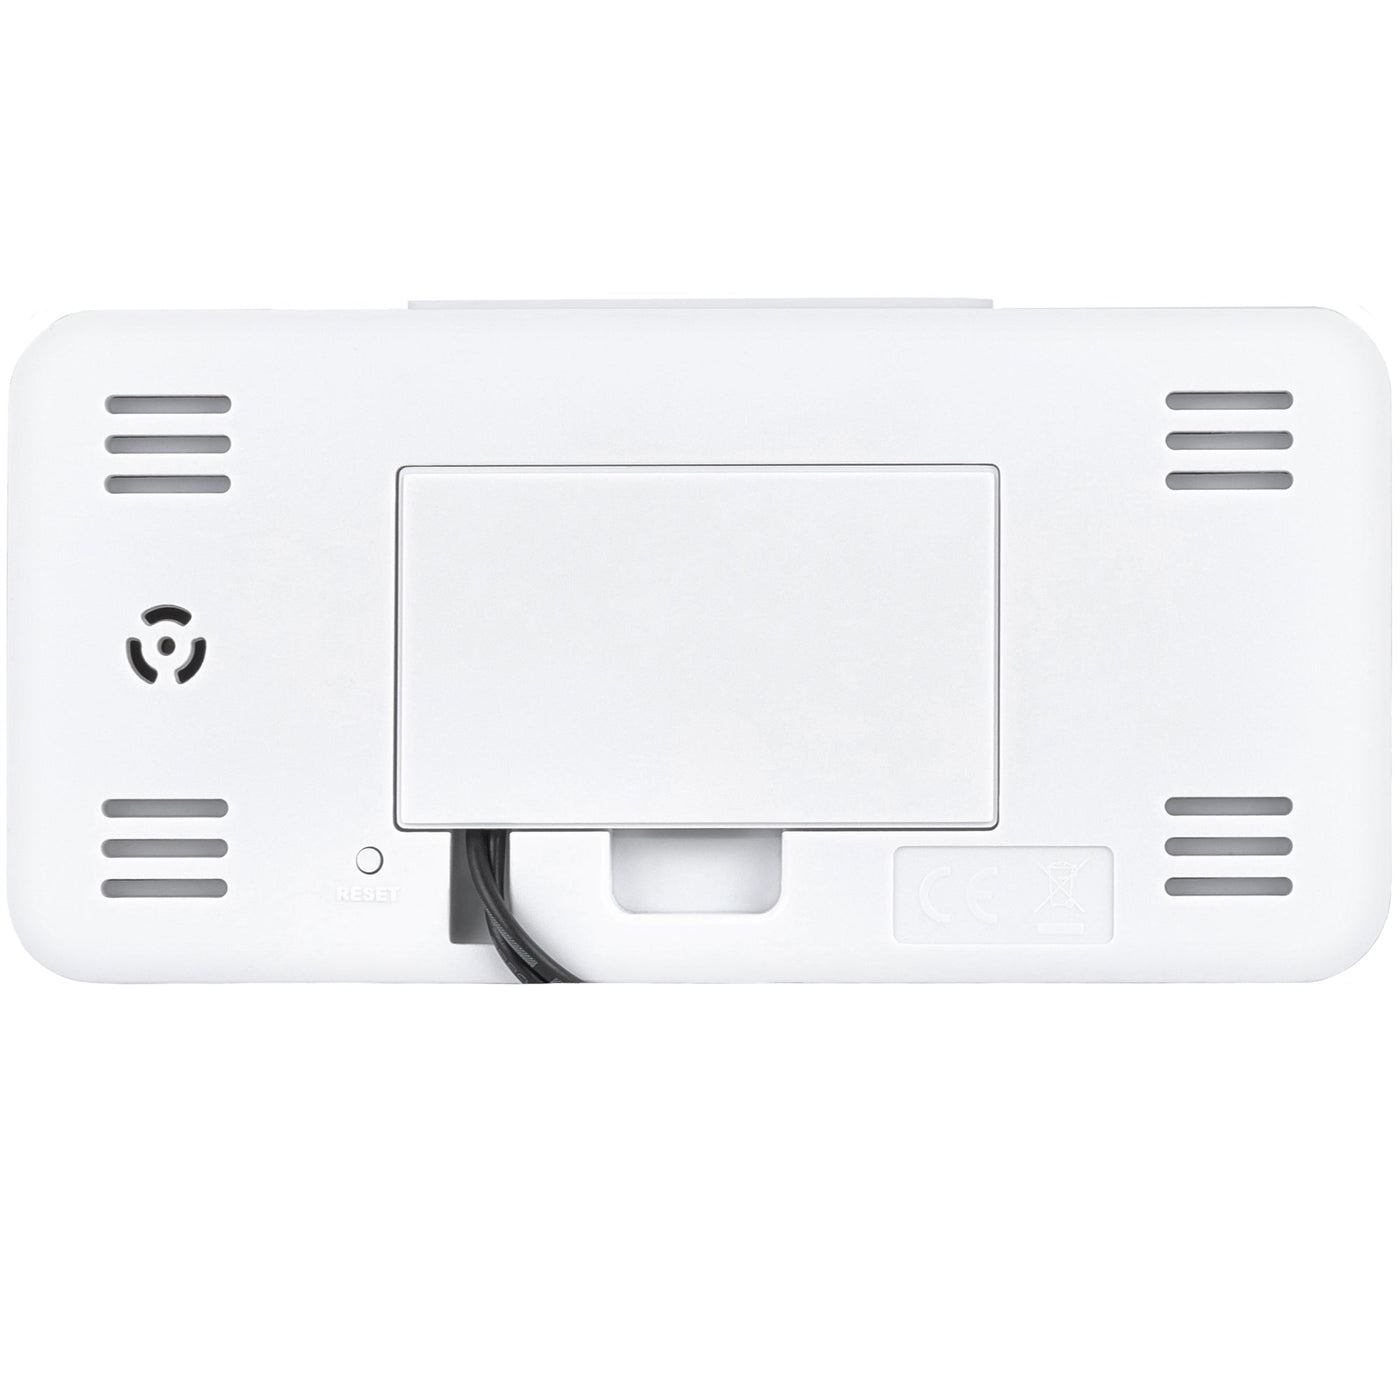 Acctim Rialto Radio Controlled Digital Alarm Clock White - timeframedclocks